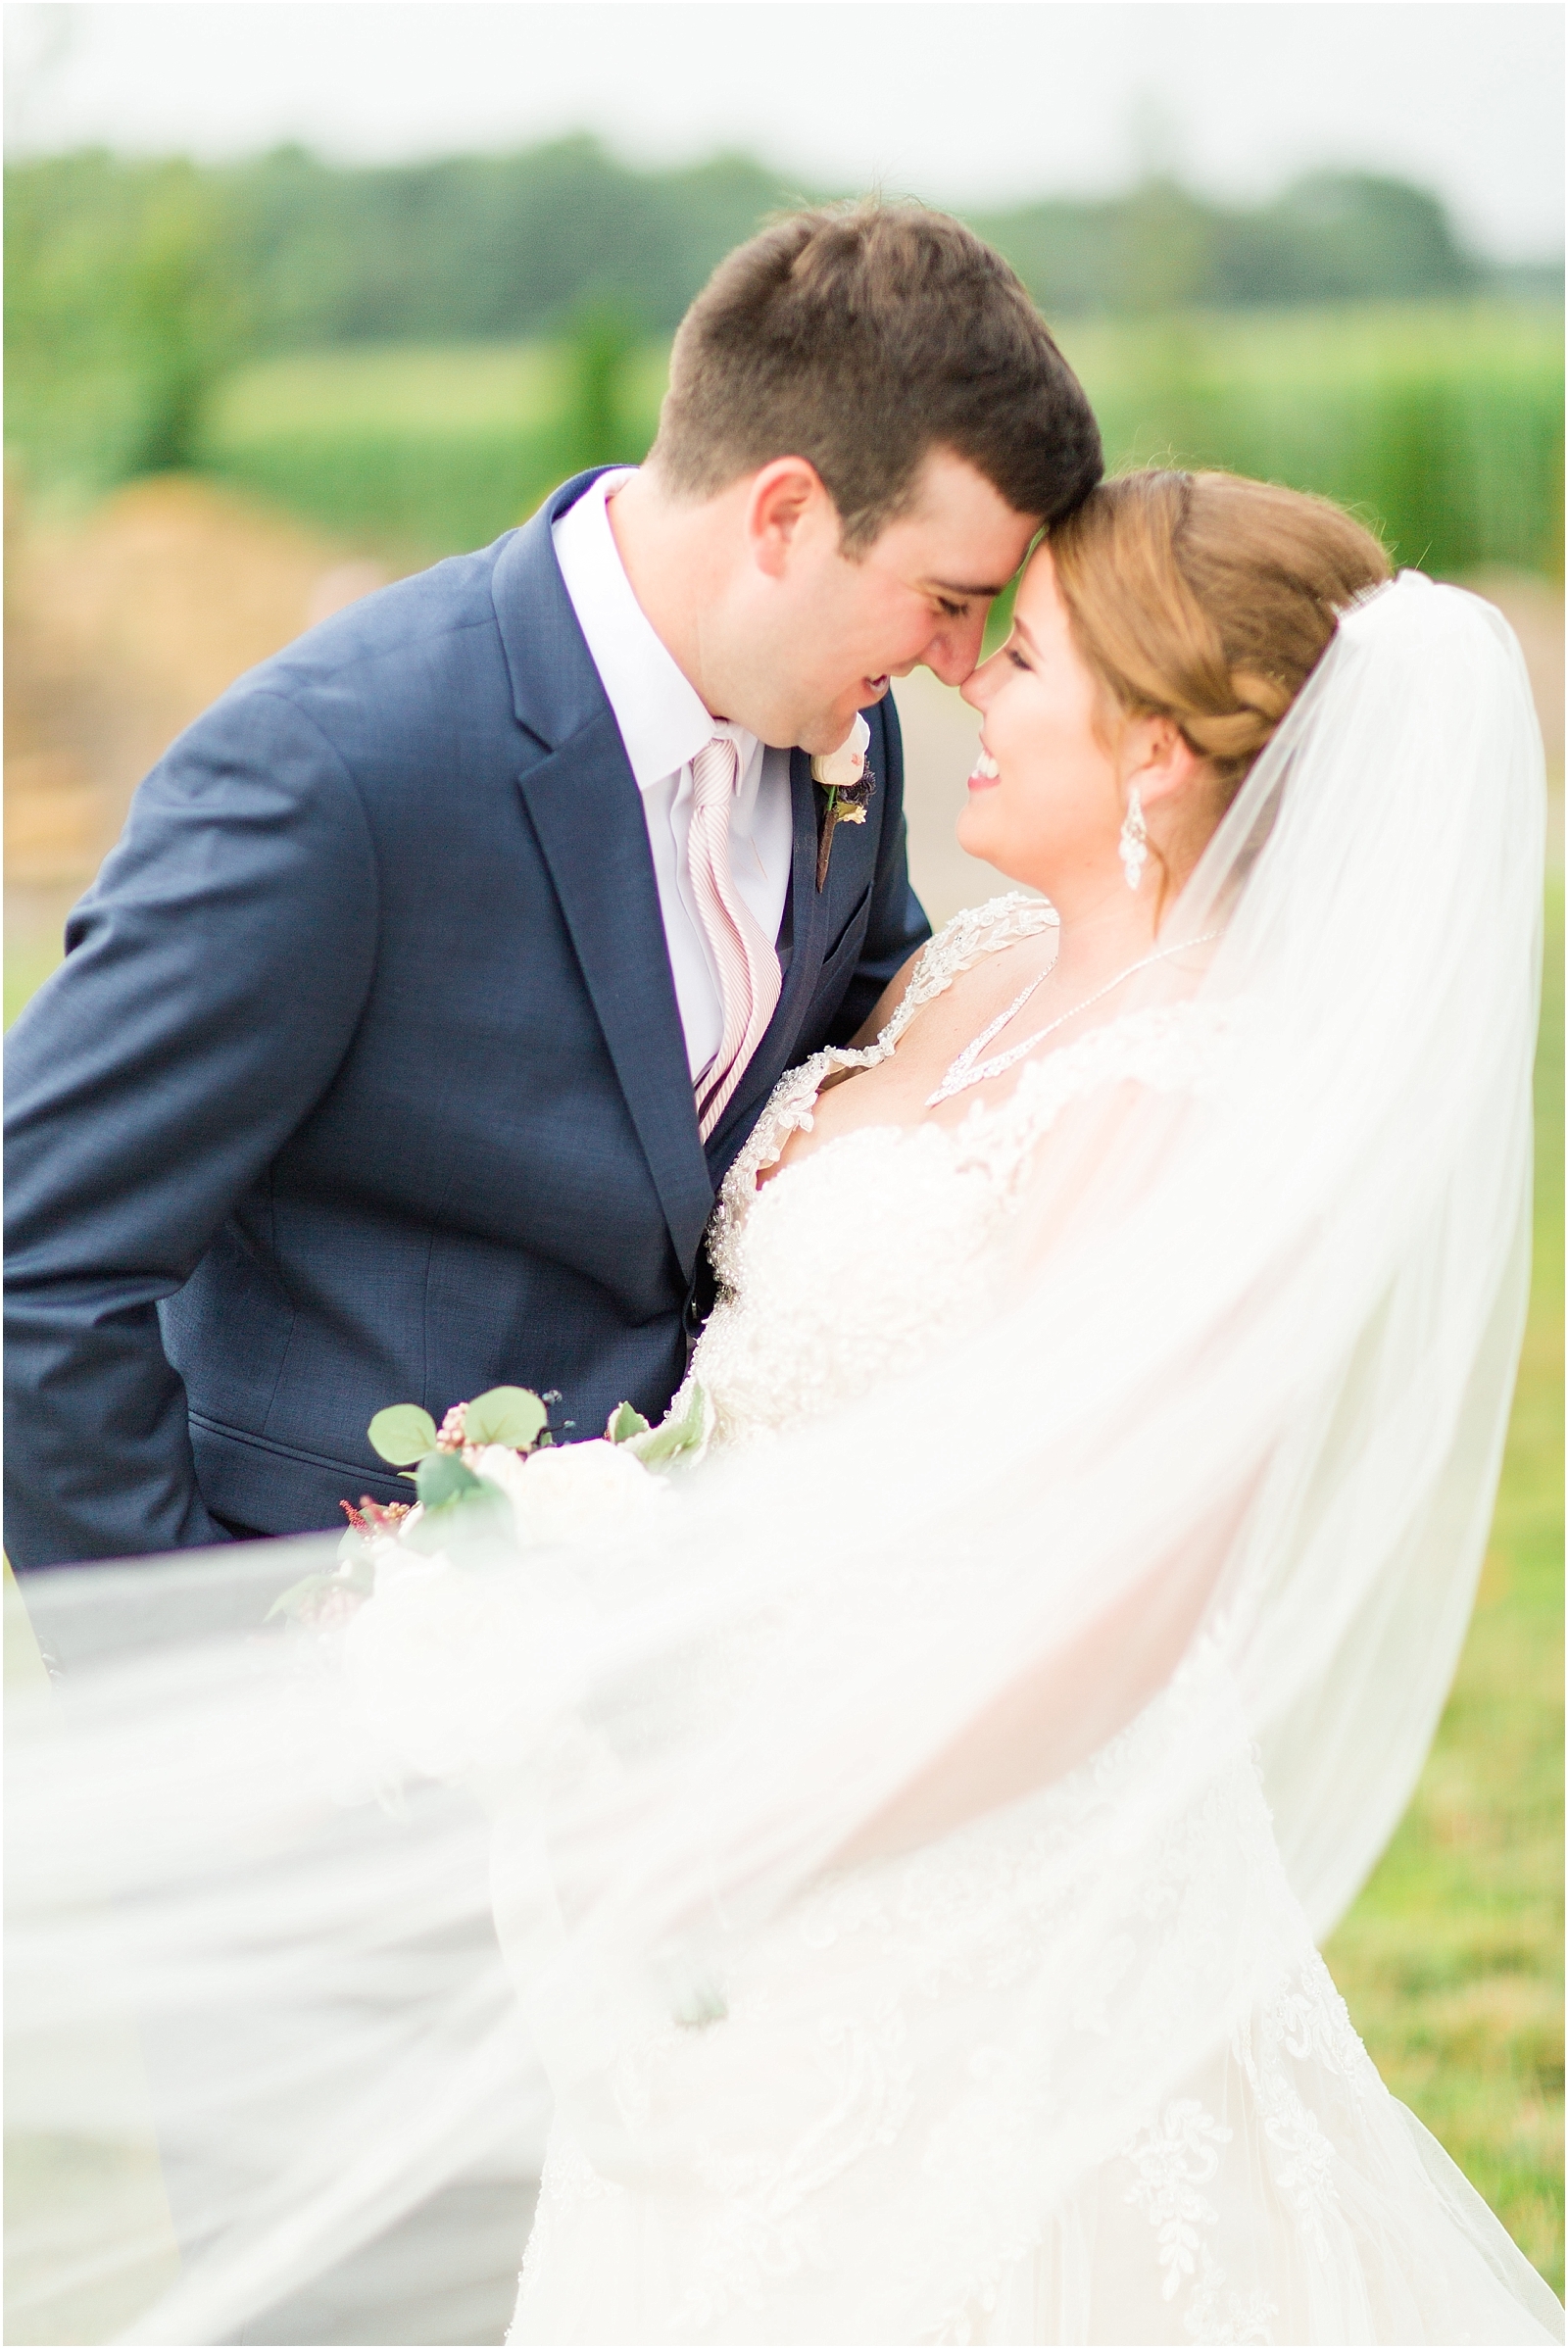 Rachel and Michael | Bret and Brandie Photography | Evansville Wedding Photographers 0047.jpg